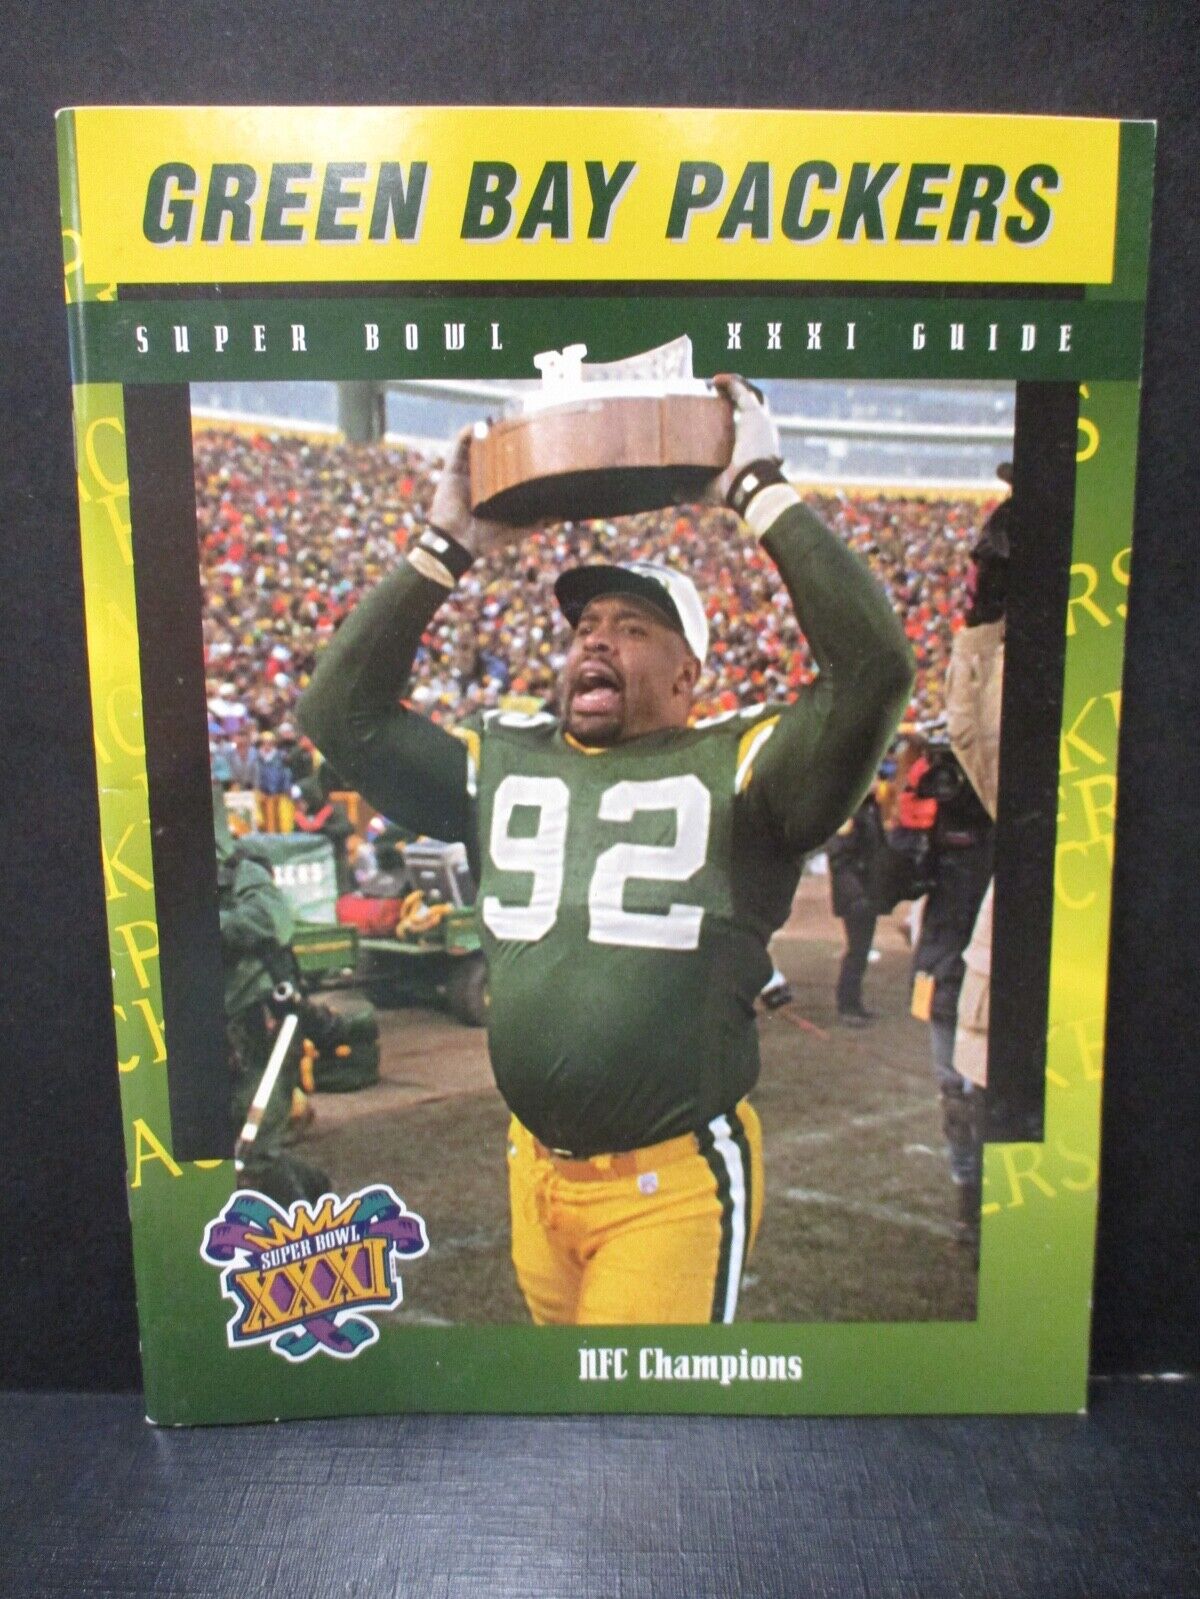 Super Bowl 31 XXXI NFC Champions Green Bay Packers Media Guide Reggie White EX